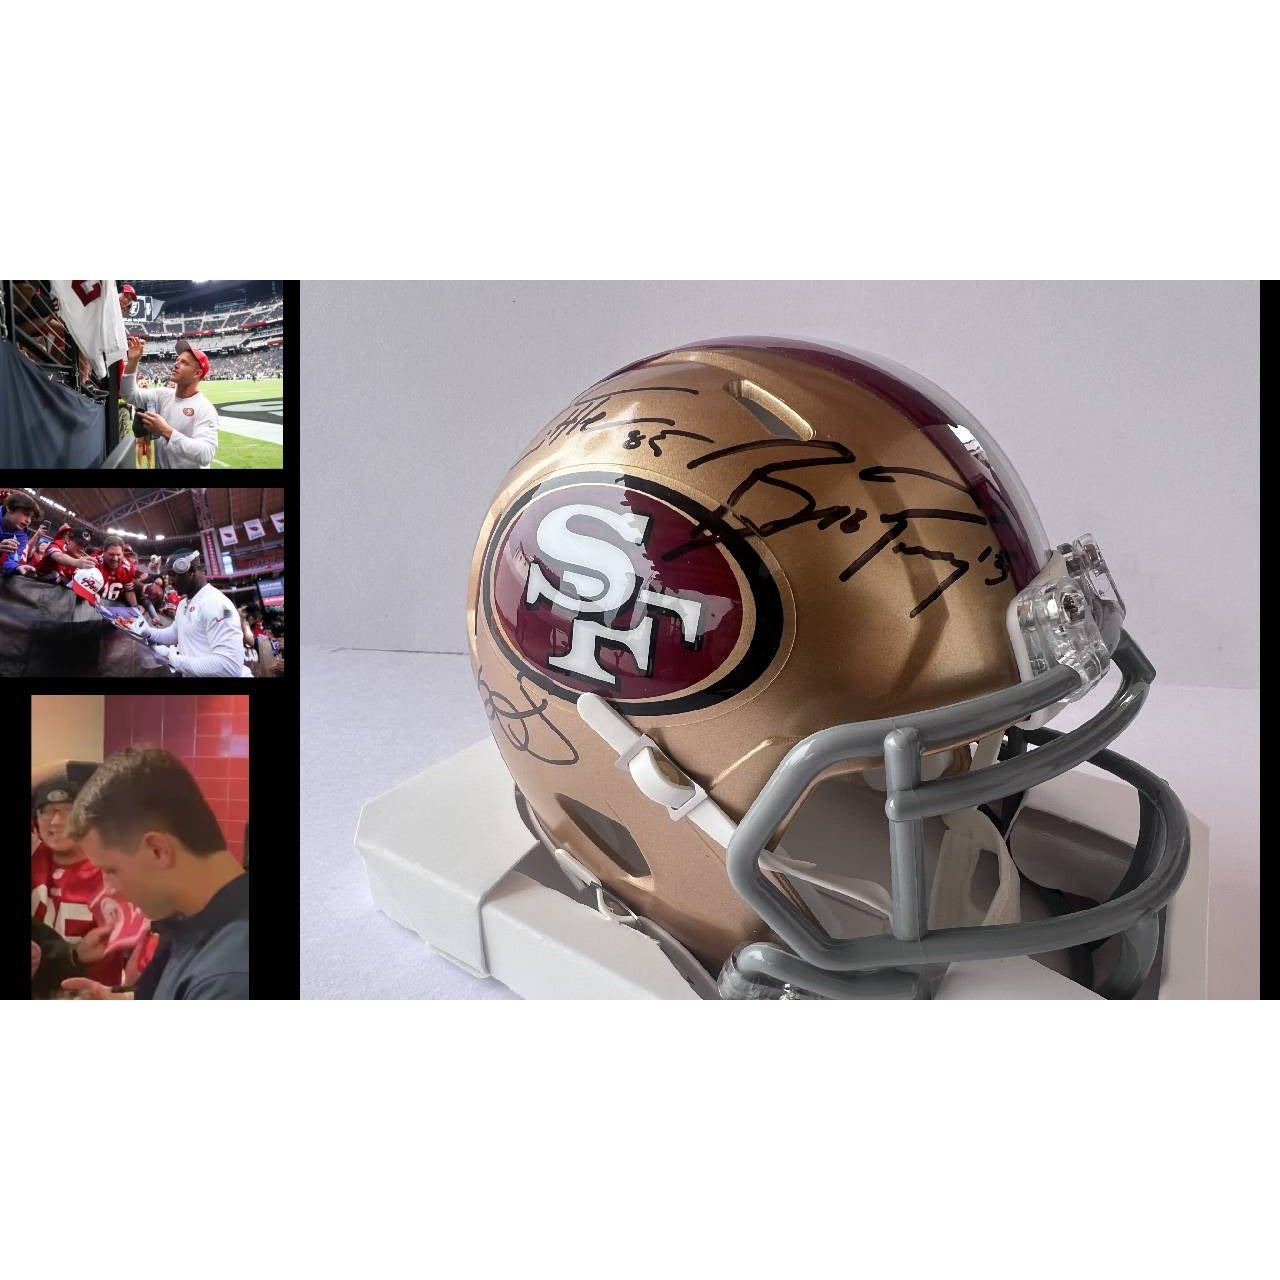 San Francisco 49ers Deebo Samuel Brock Purdy & Christian McCaffrey  mini helmet signed with proof